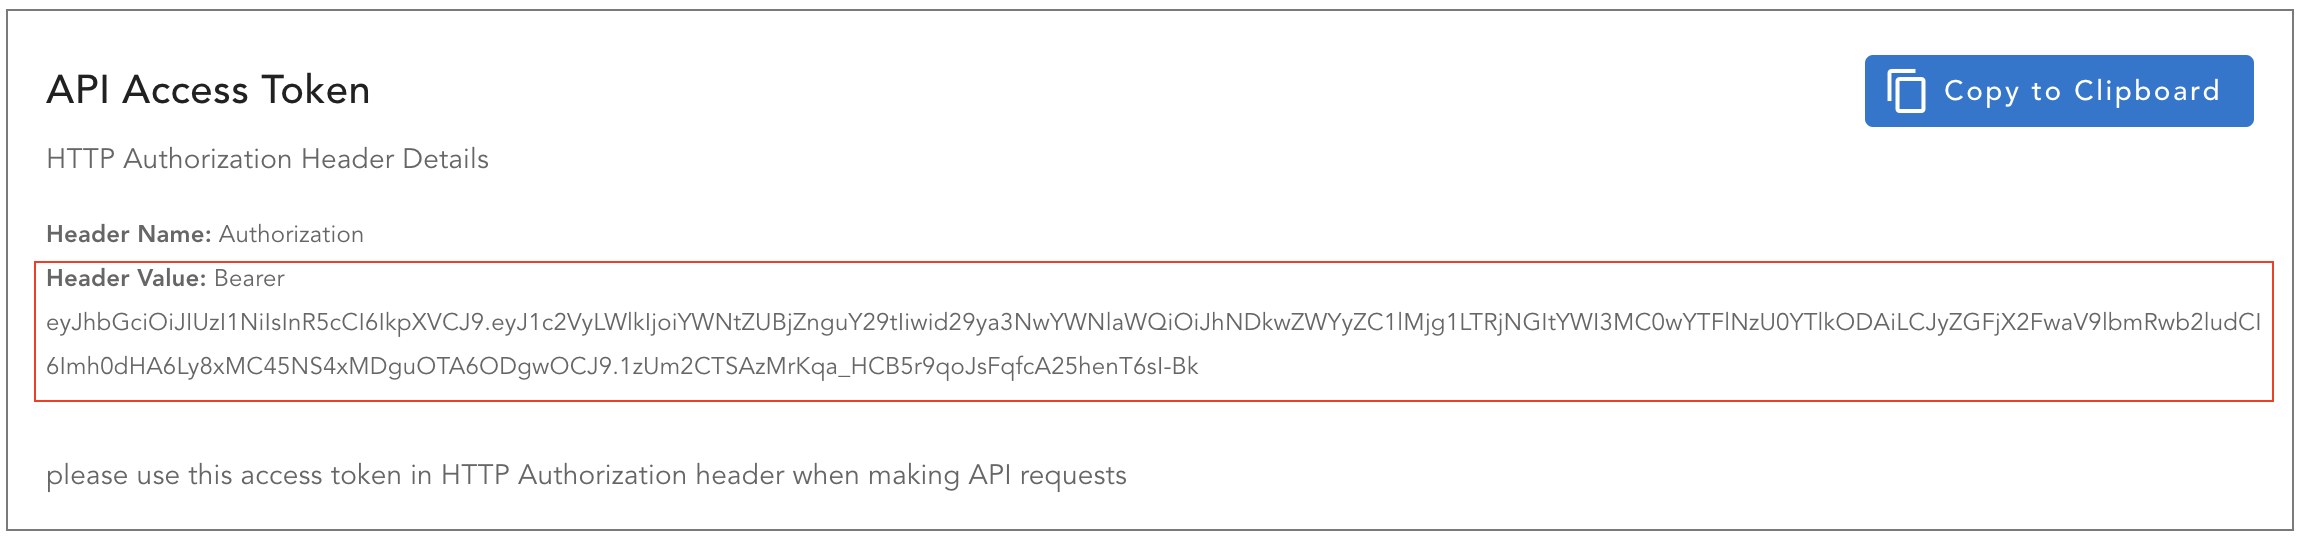 AIA_API API Access Token